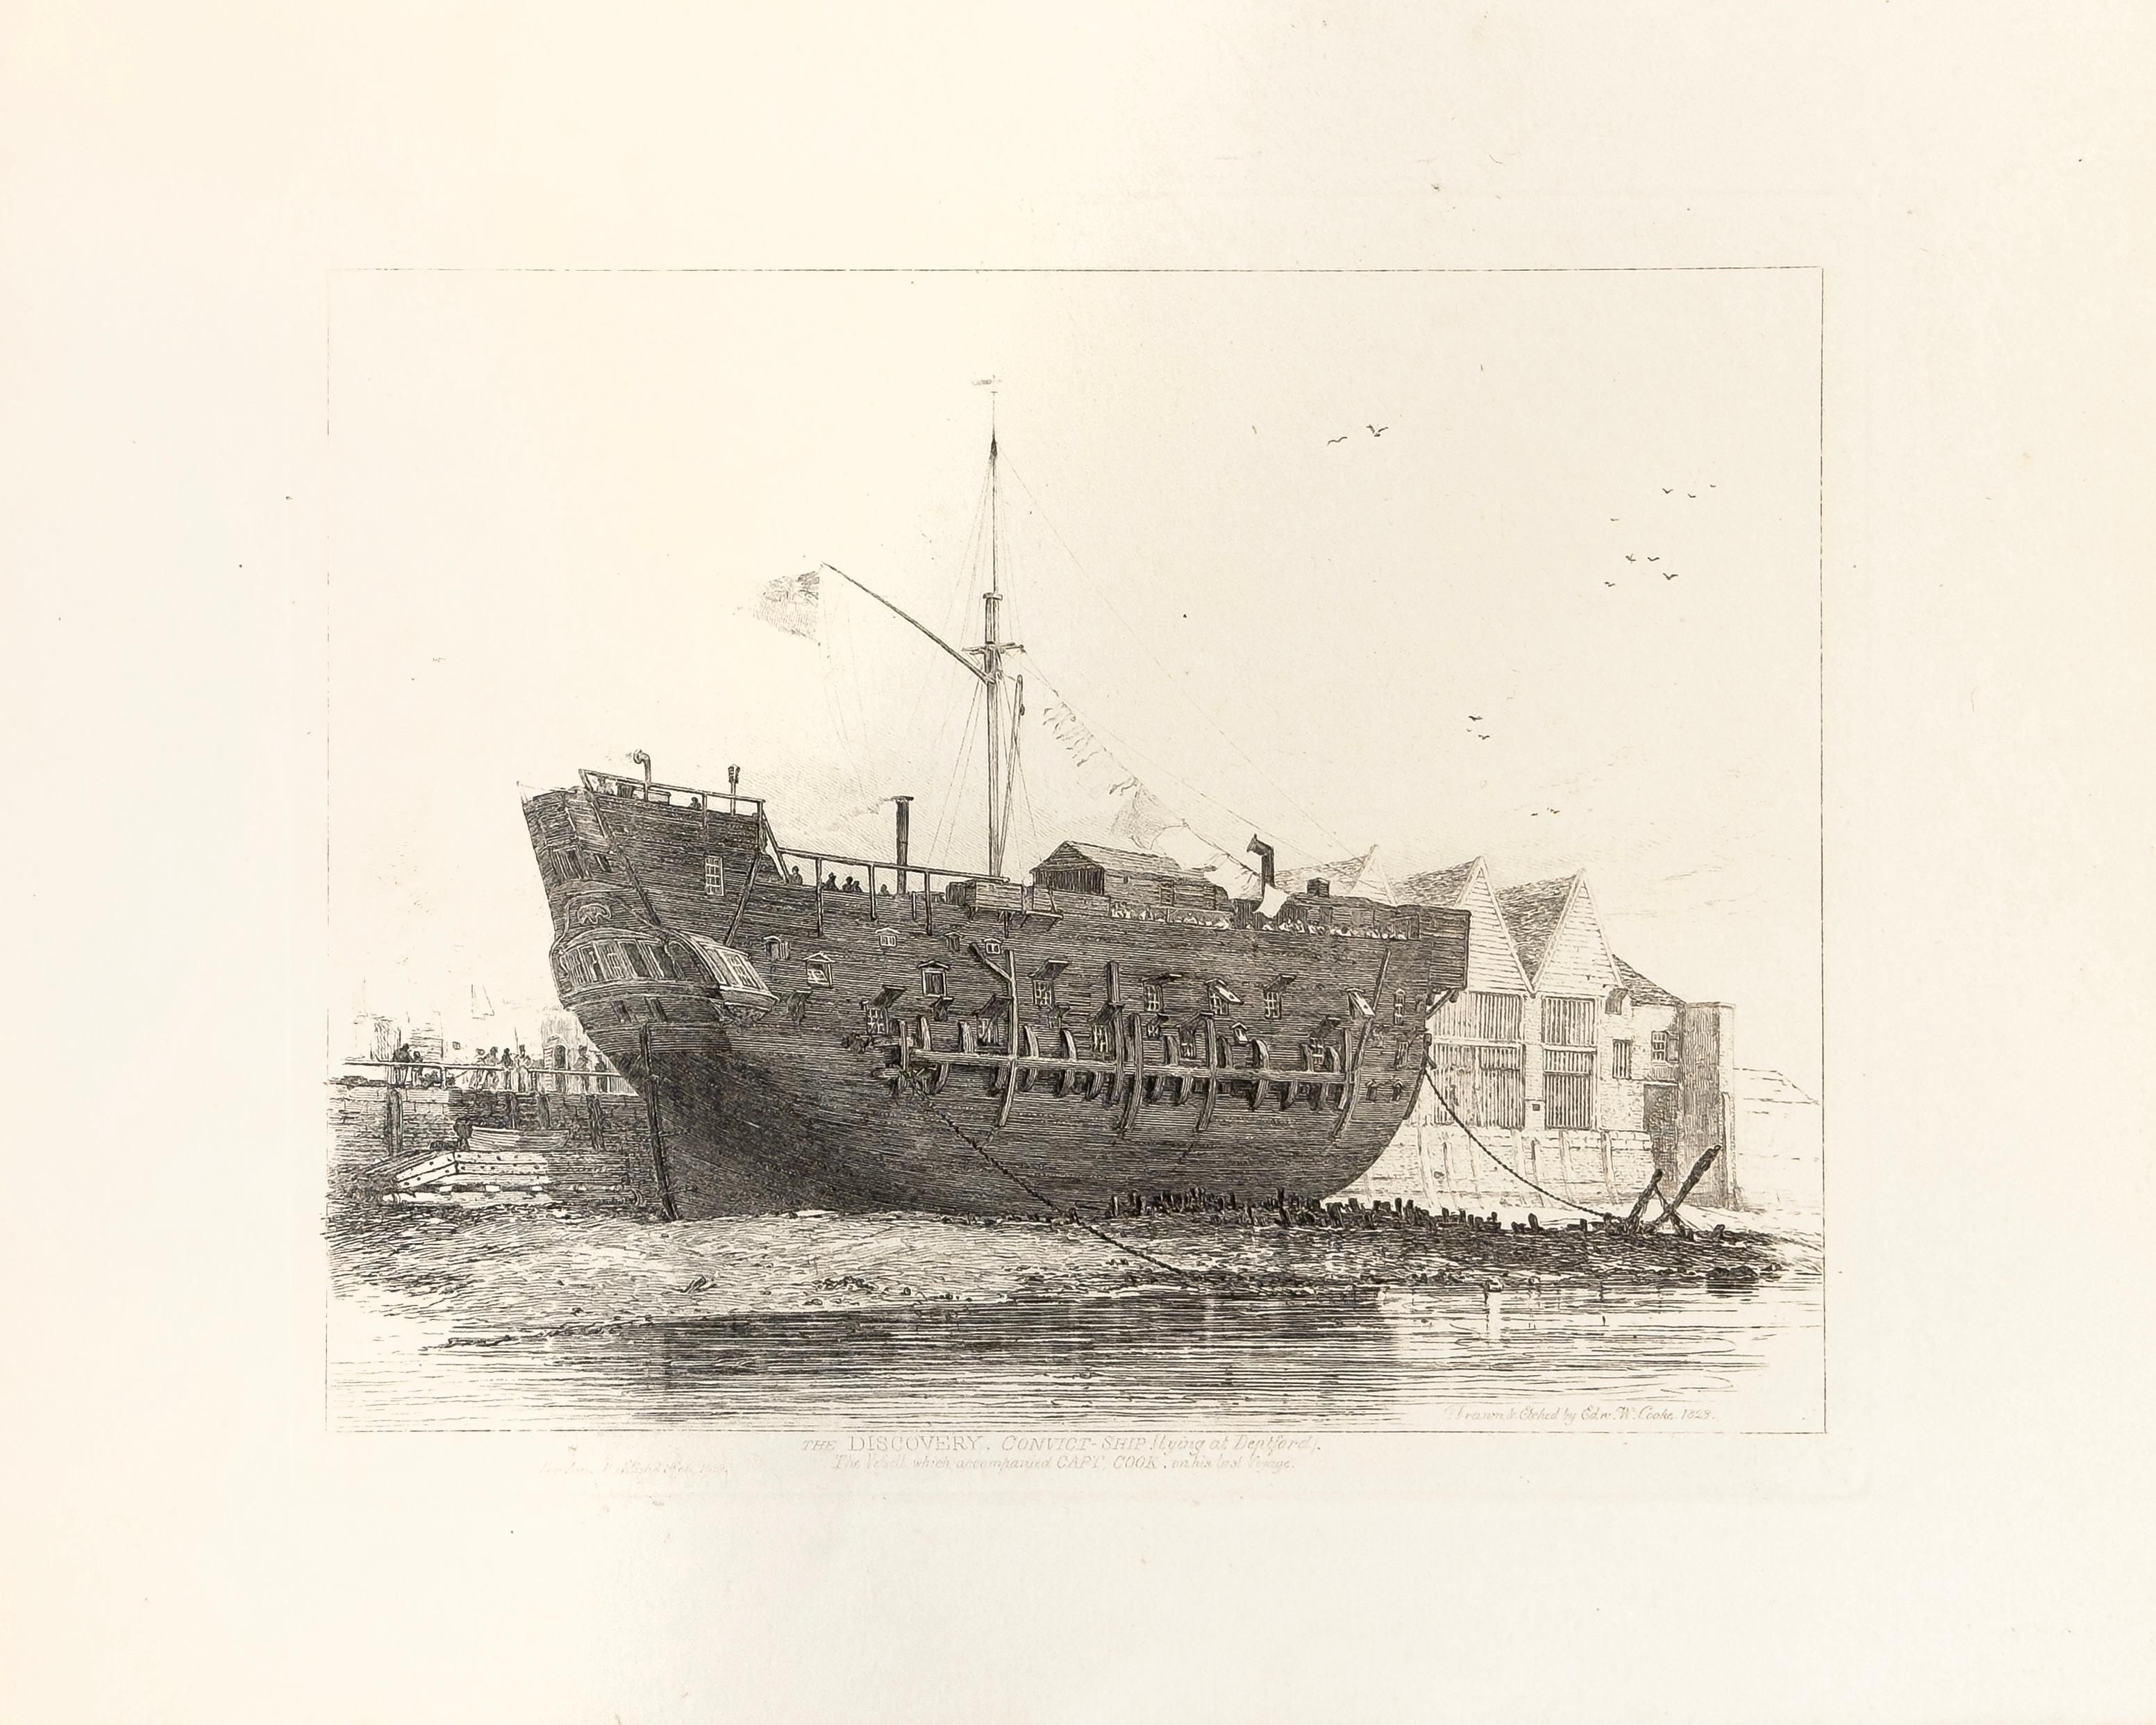 E. W. Cooke Print - 29: The Discovery, Convict Ship